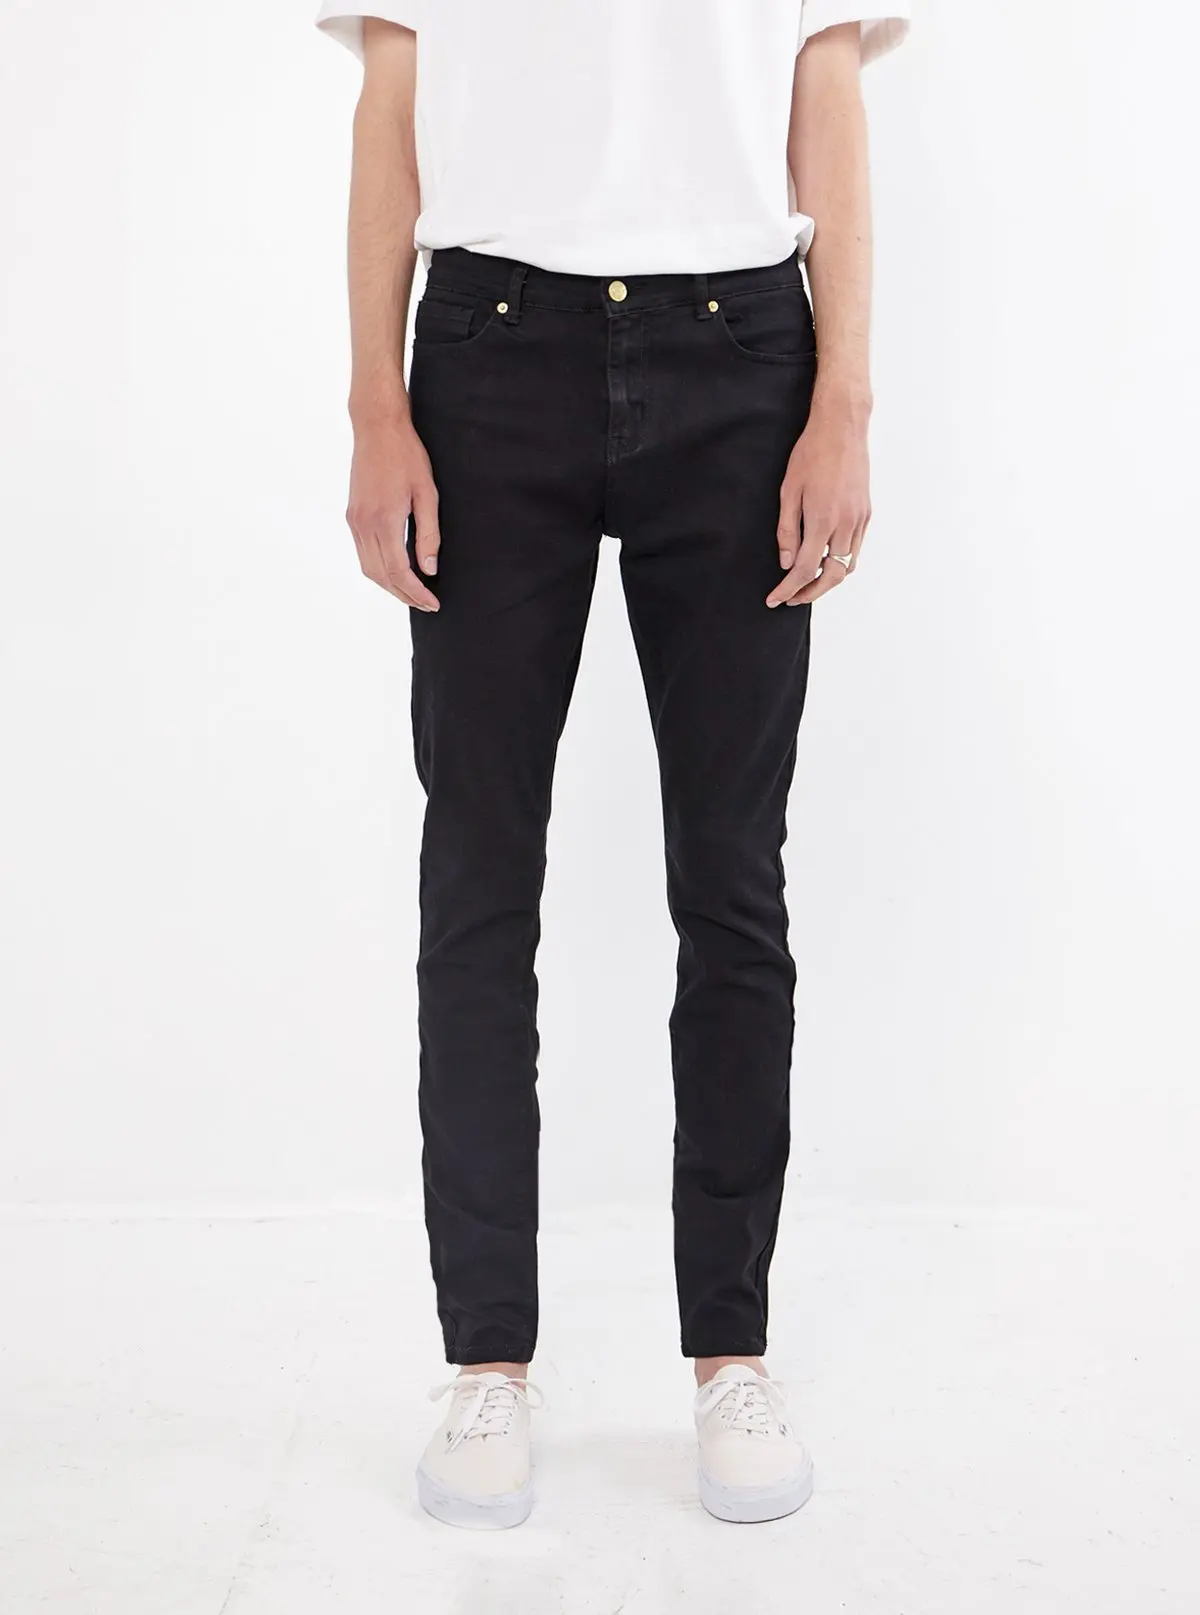 high quality black jeans